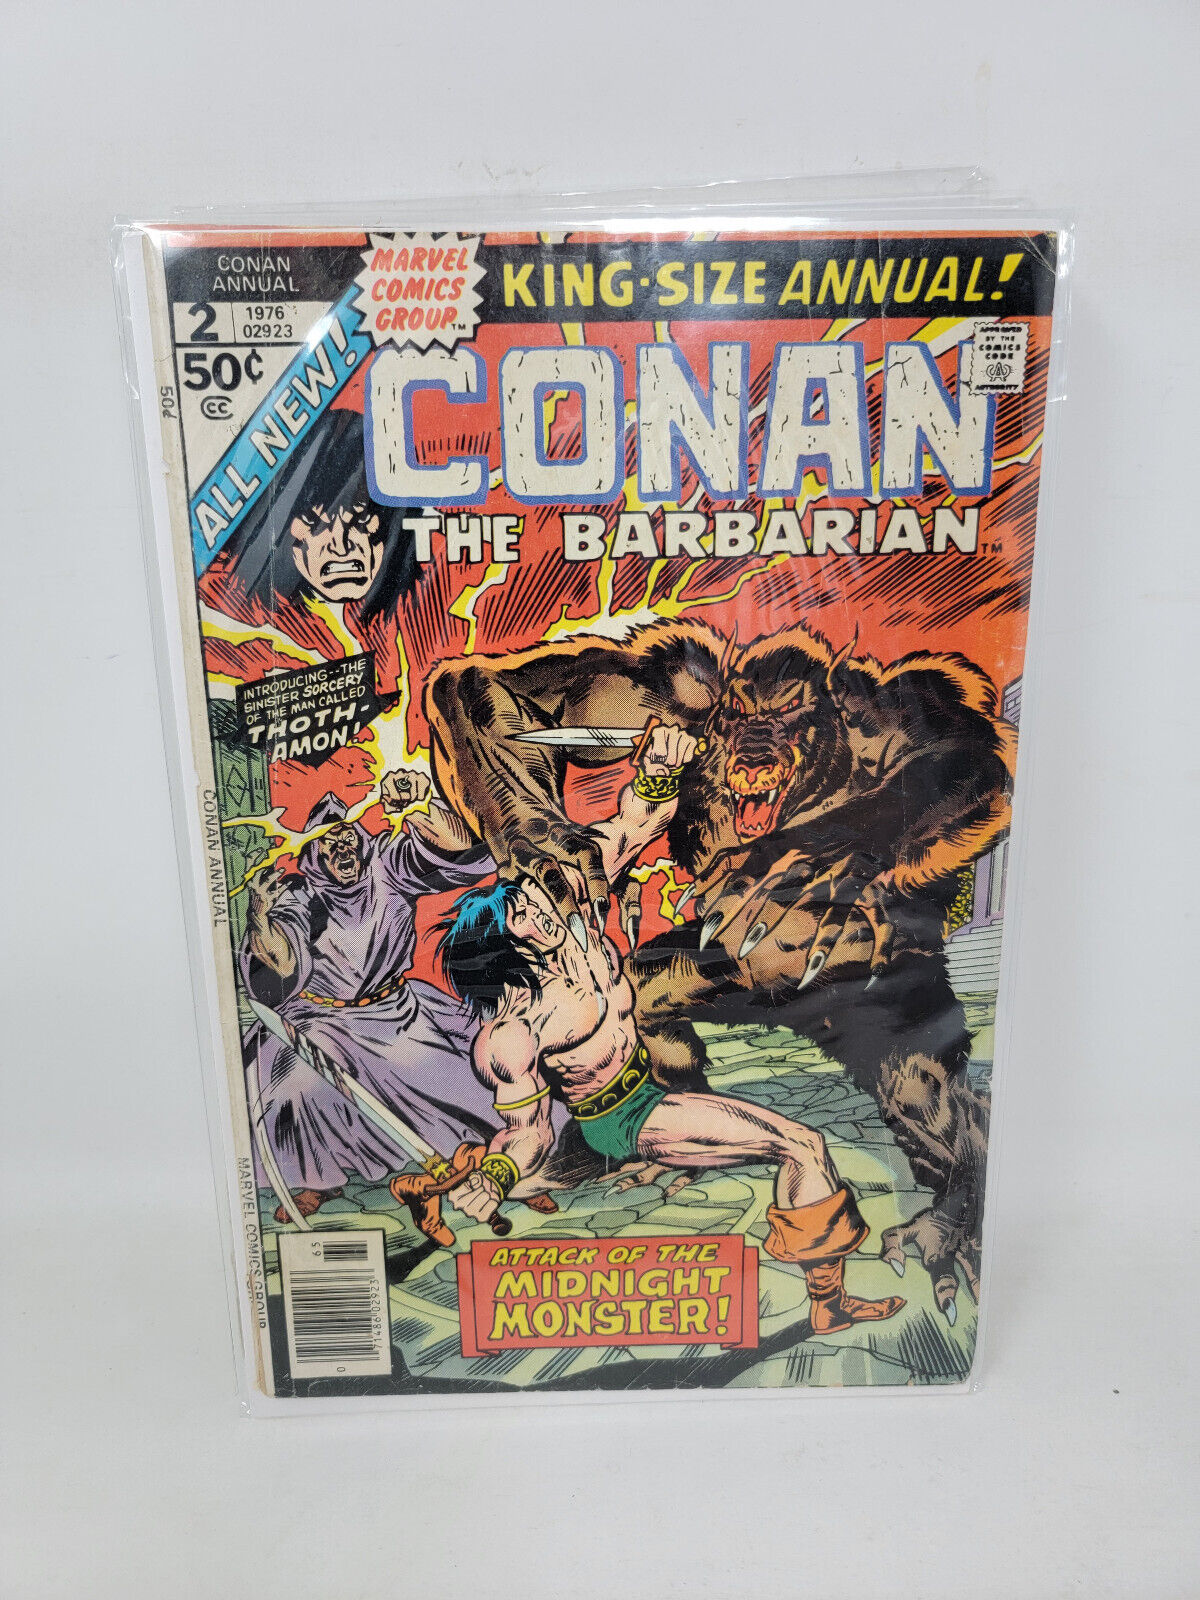 CONAN THE BARBARIAN ANNUAL #2 KING-SIZE RICK BUCKLER SR COVER ART *1976* 4.0*